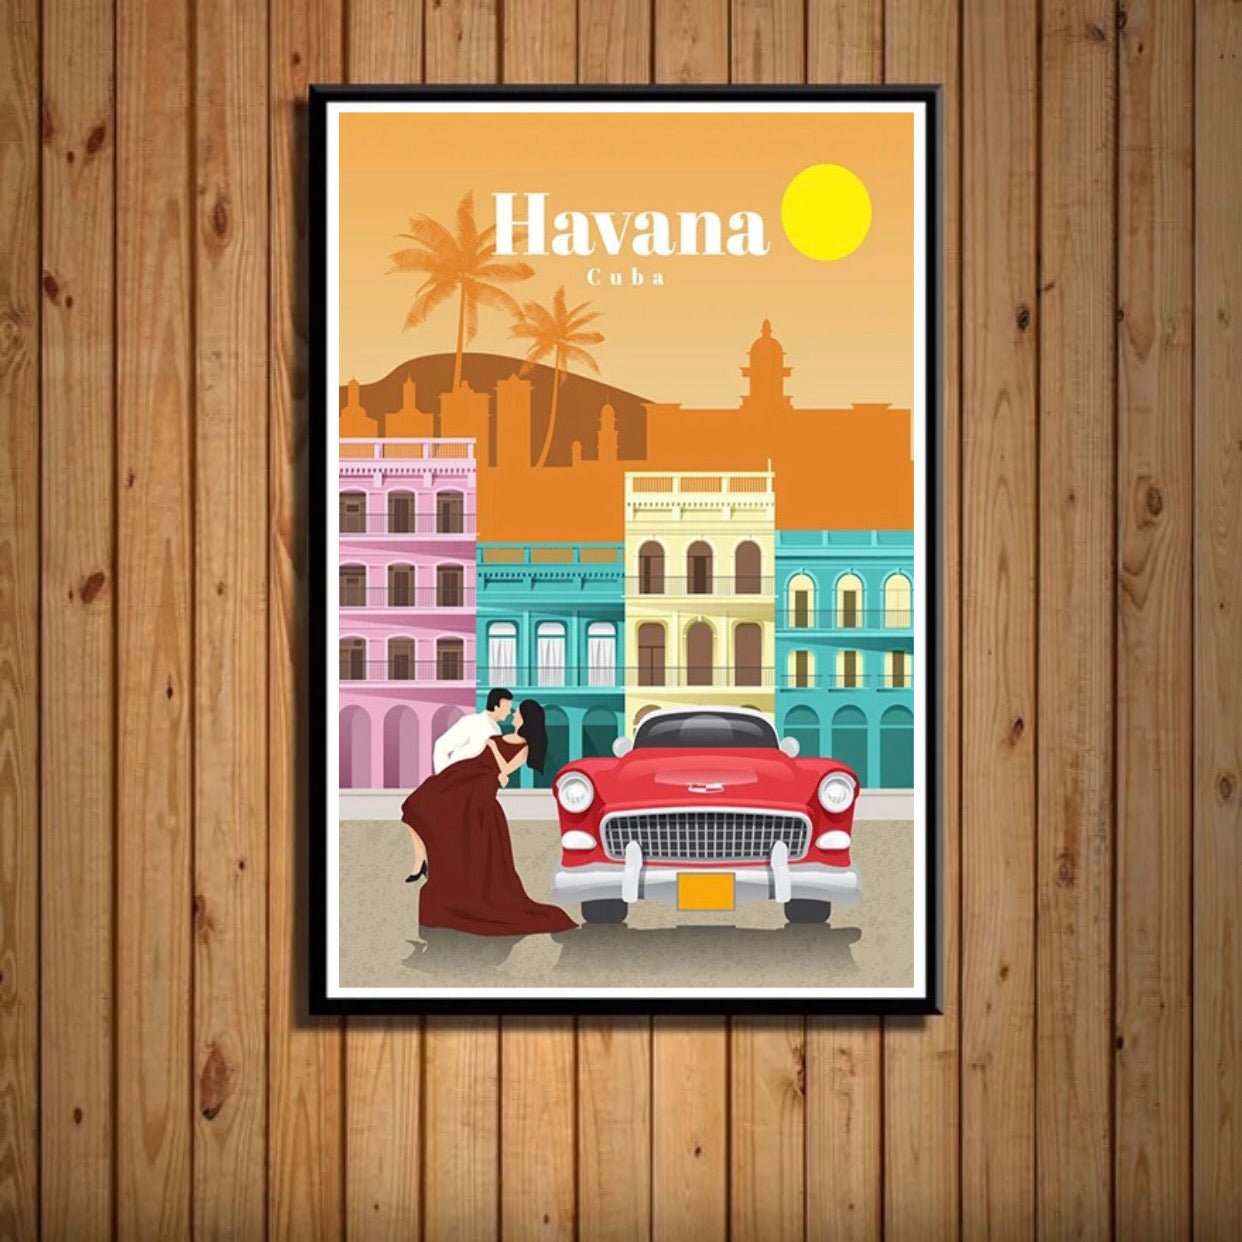 havana, cuba travel poster